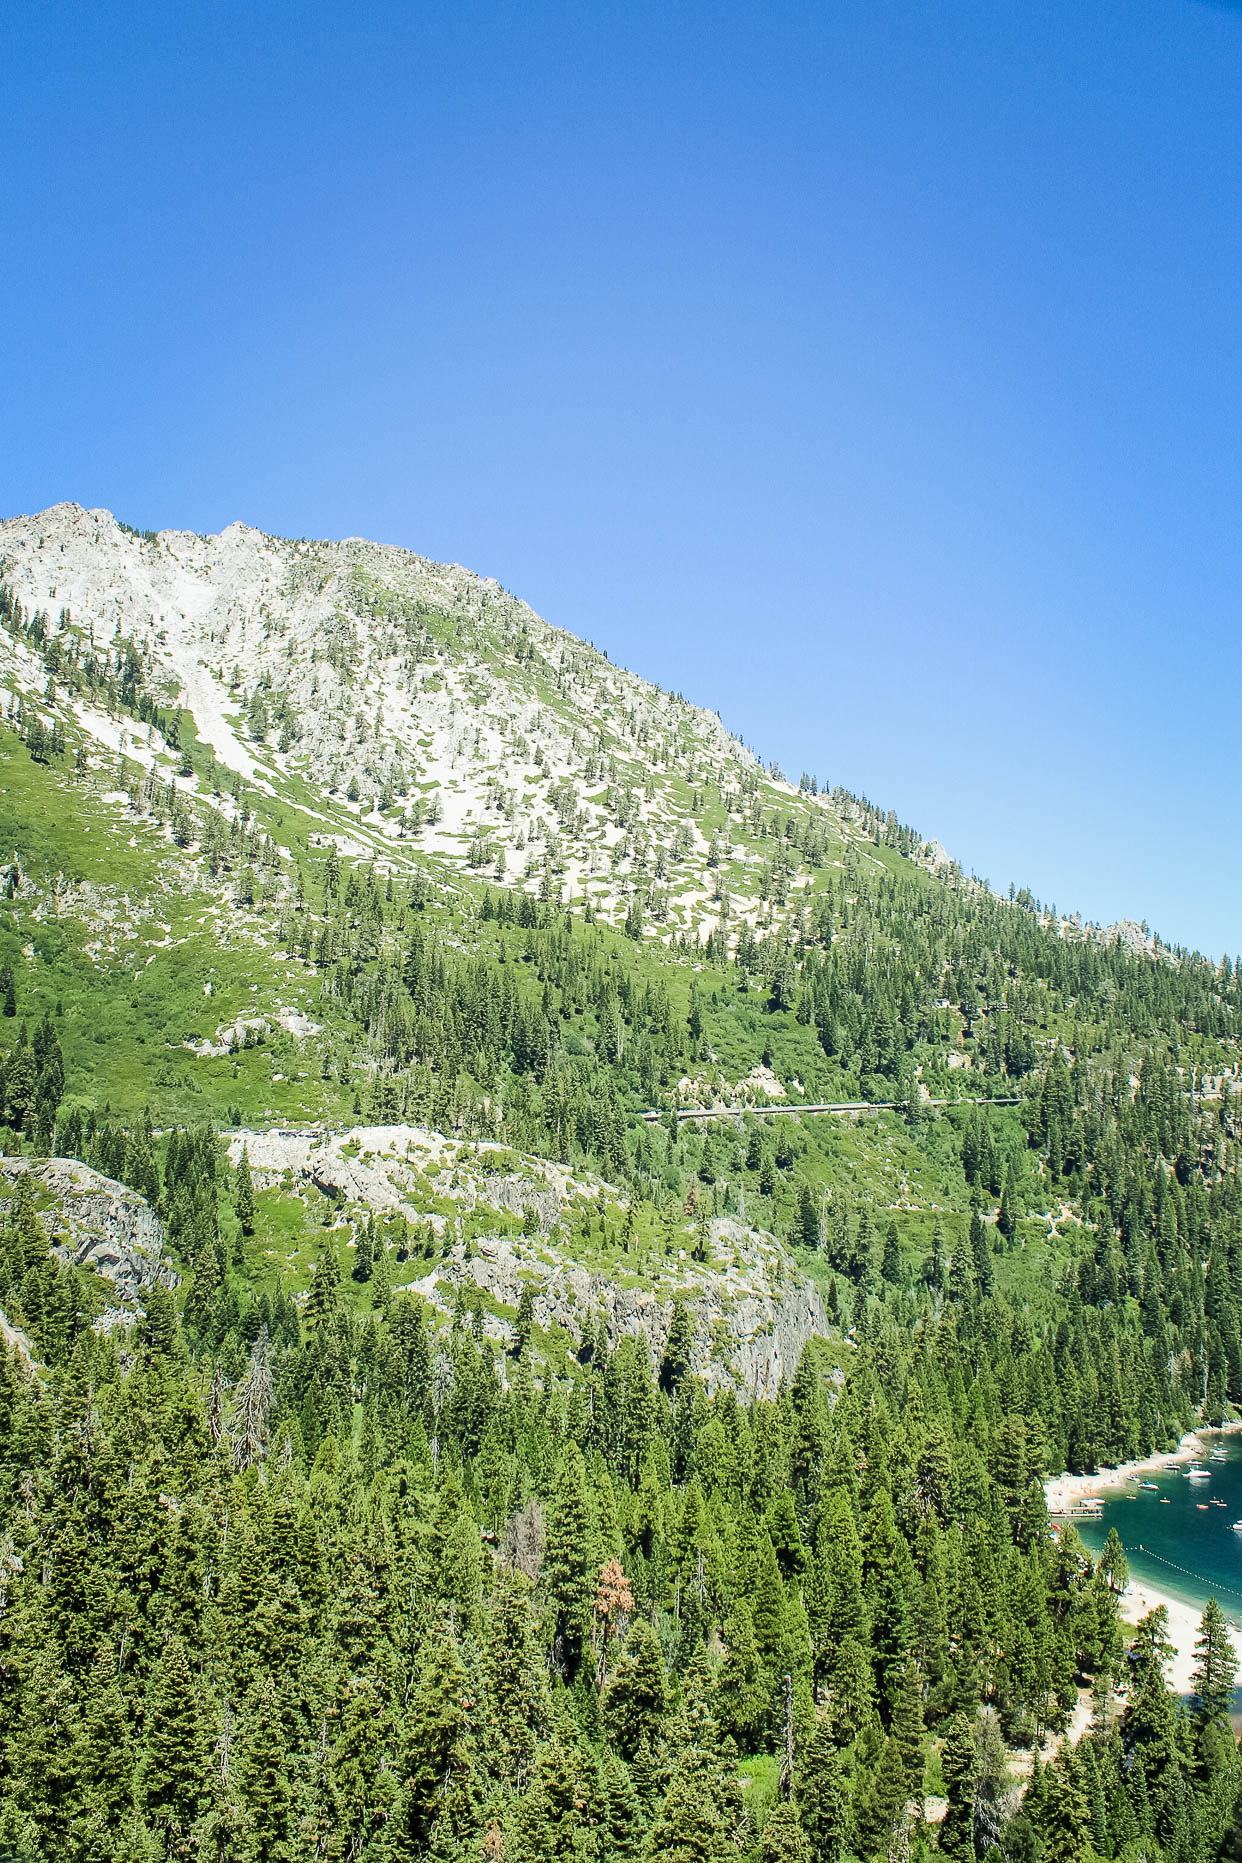  view of Emerald Bay, Lake Tahoe 